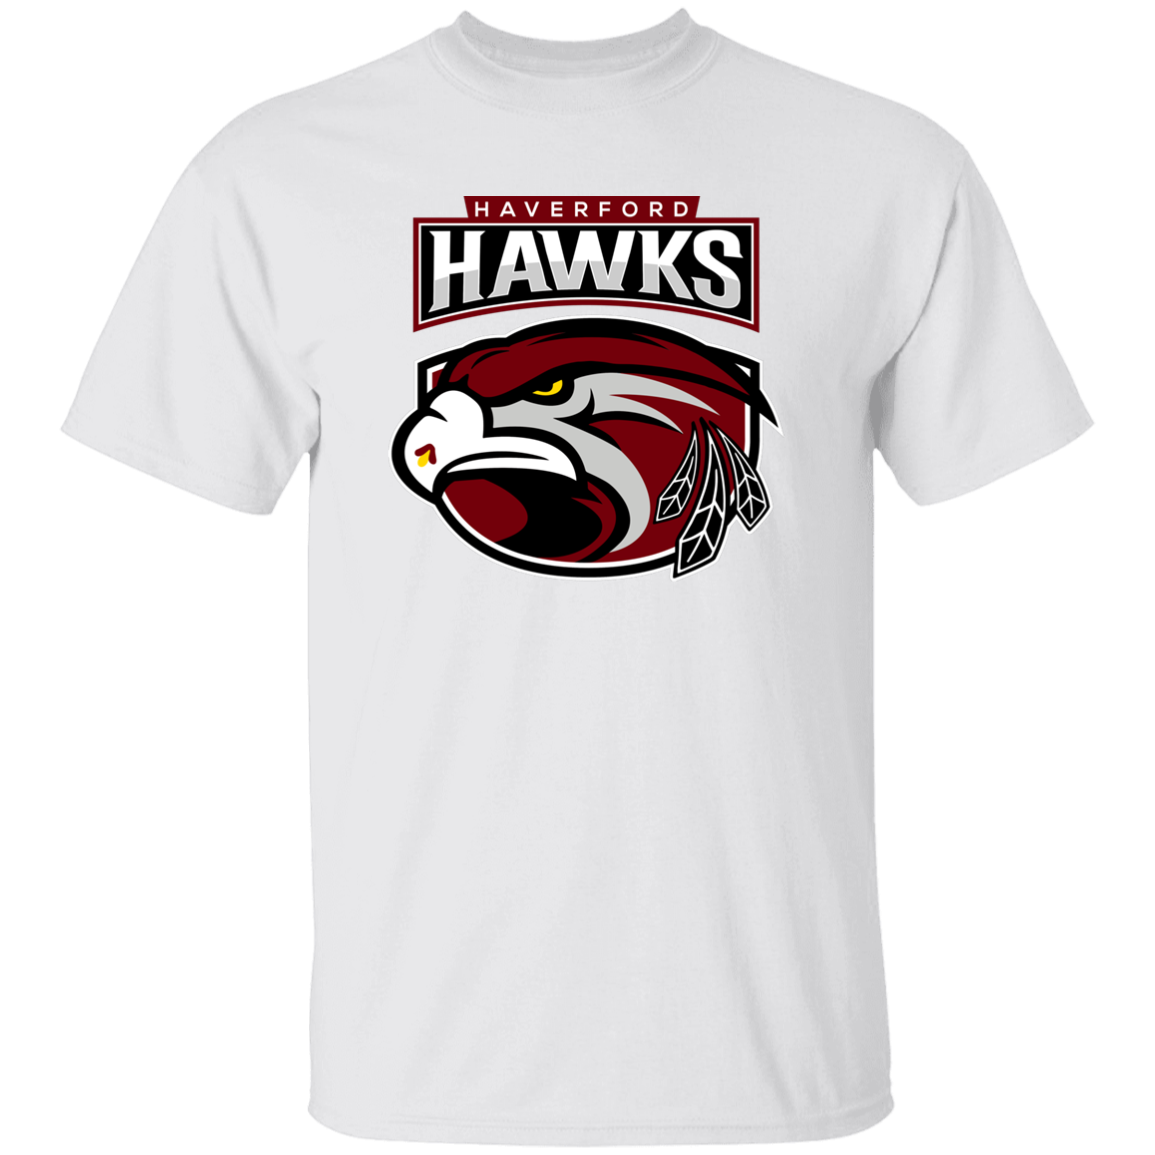 Hawks Youth 100% Cotton T-Shirt